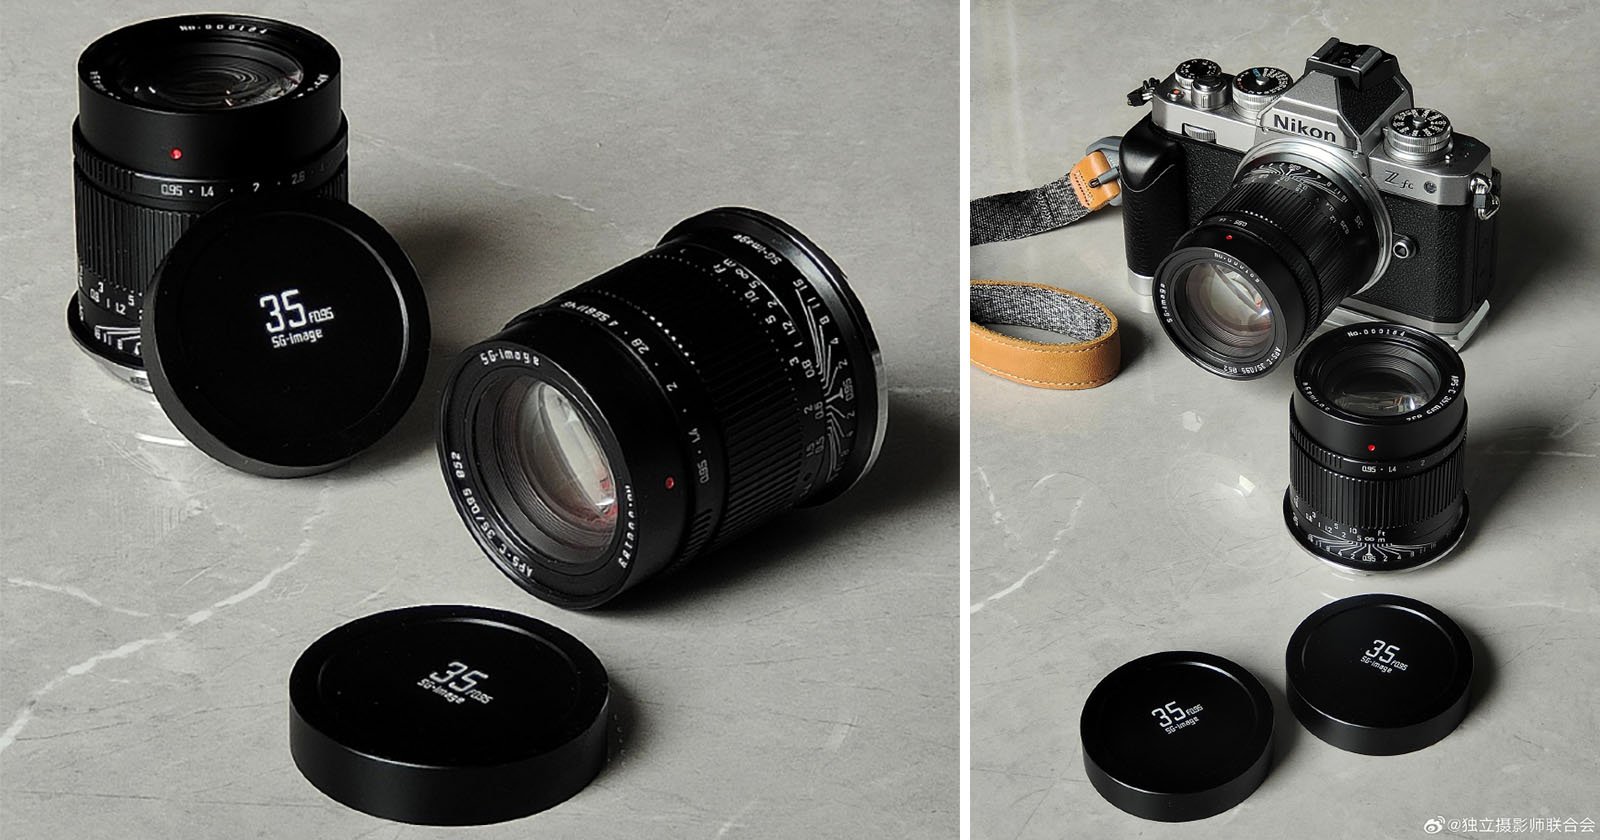 New Lens Company SG-Image Debuts Super-Fast 35mm f/0.95 APS-C Prime